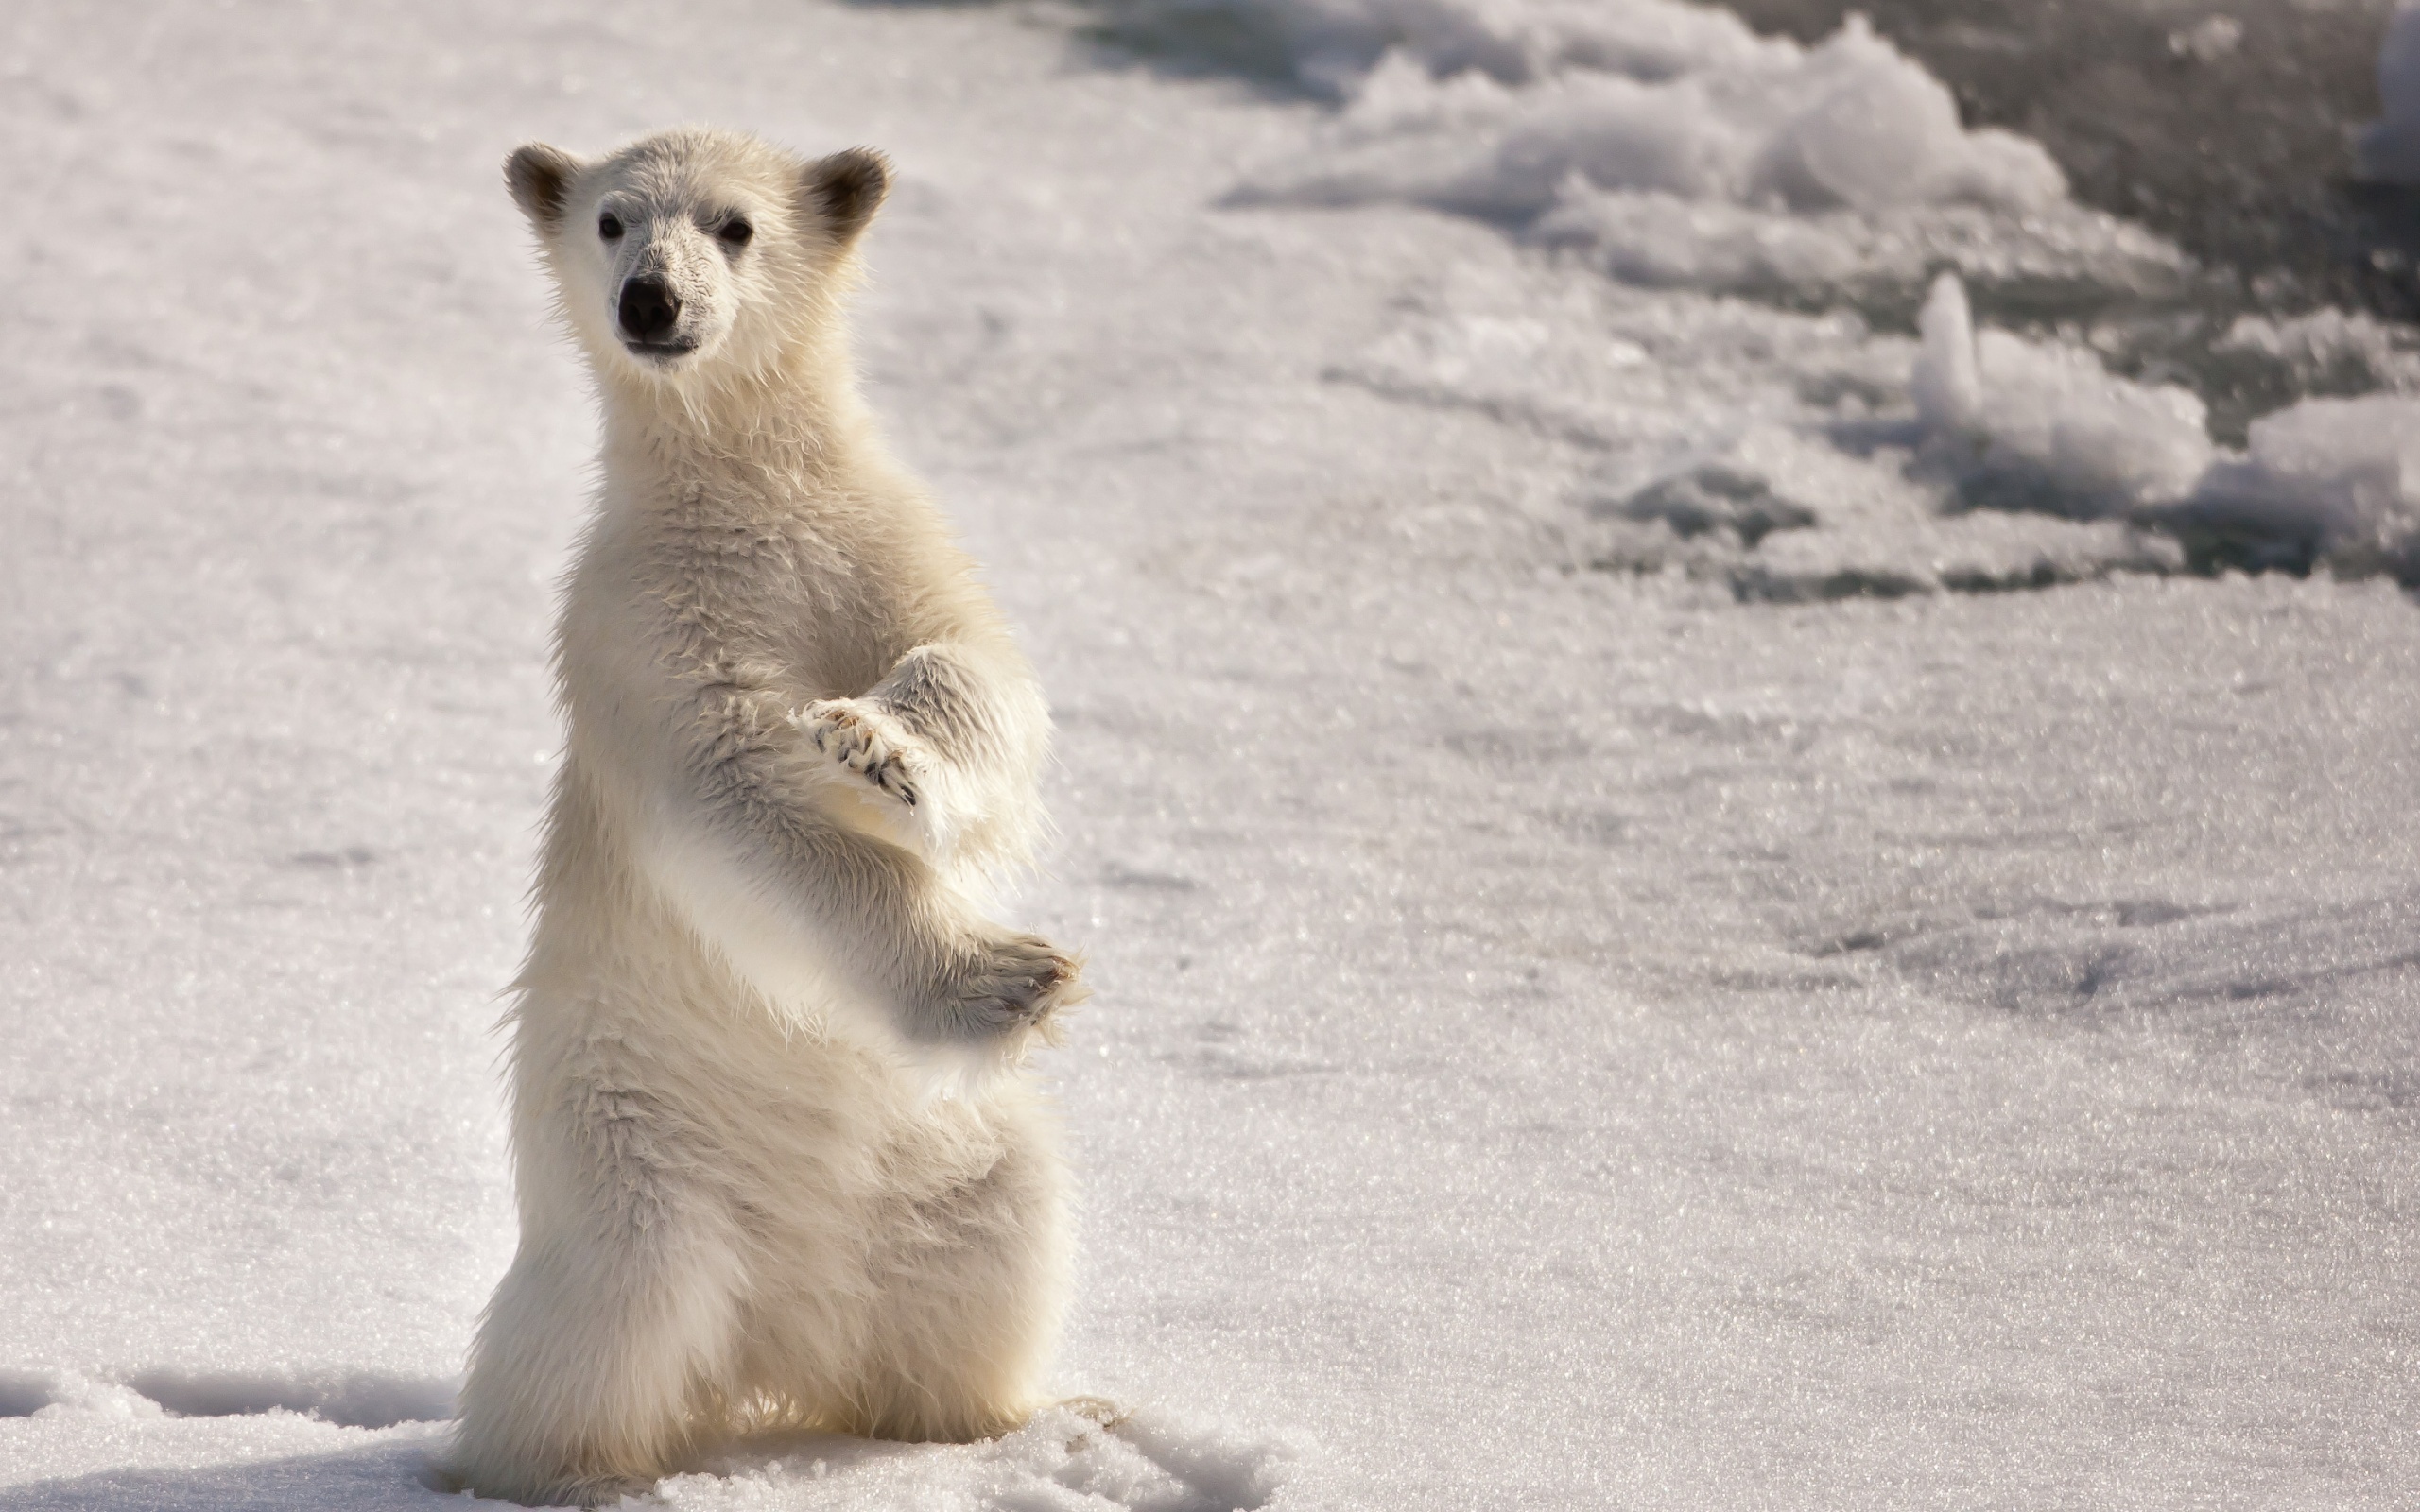 Polar bear in its natural habitat.